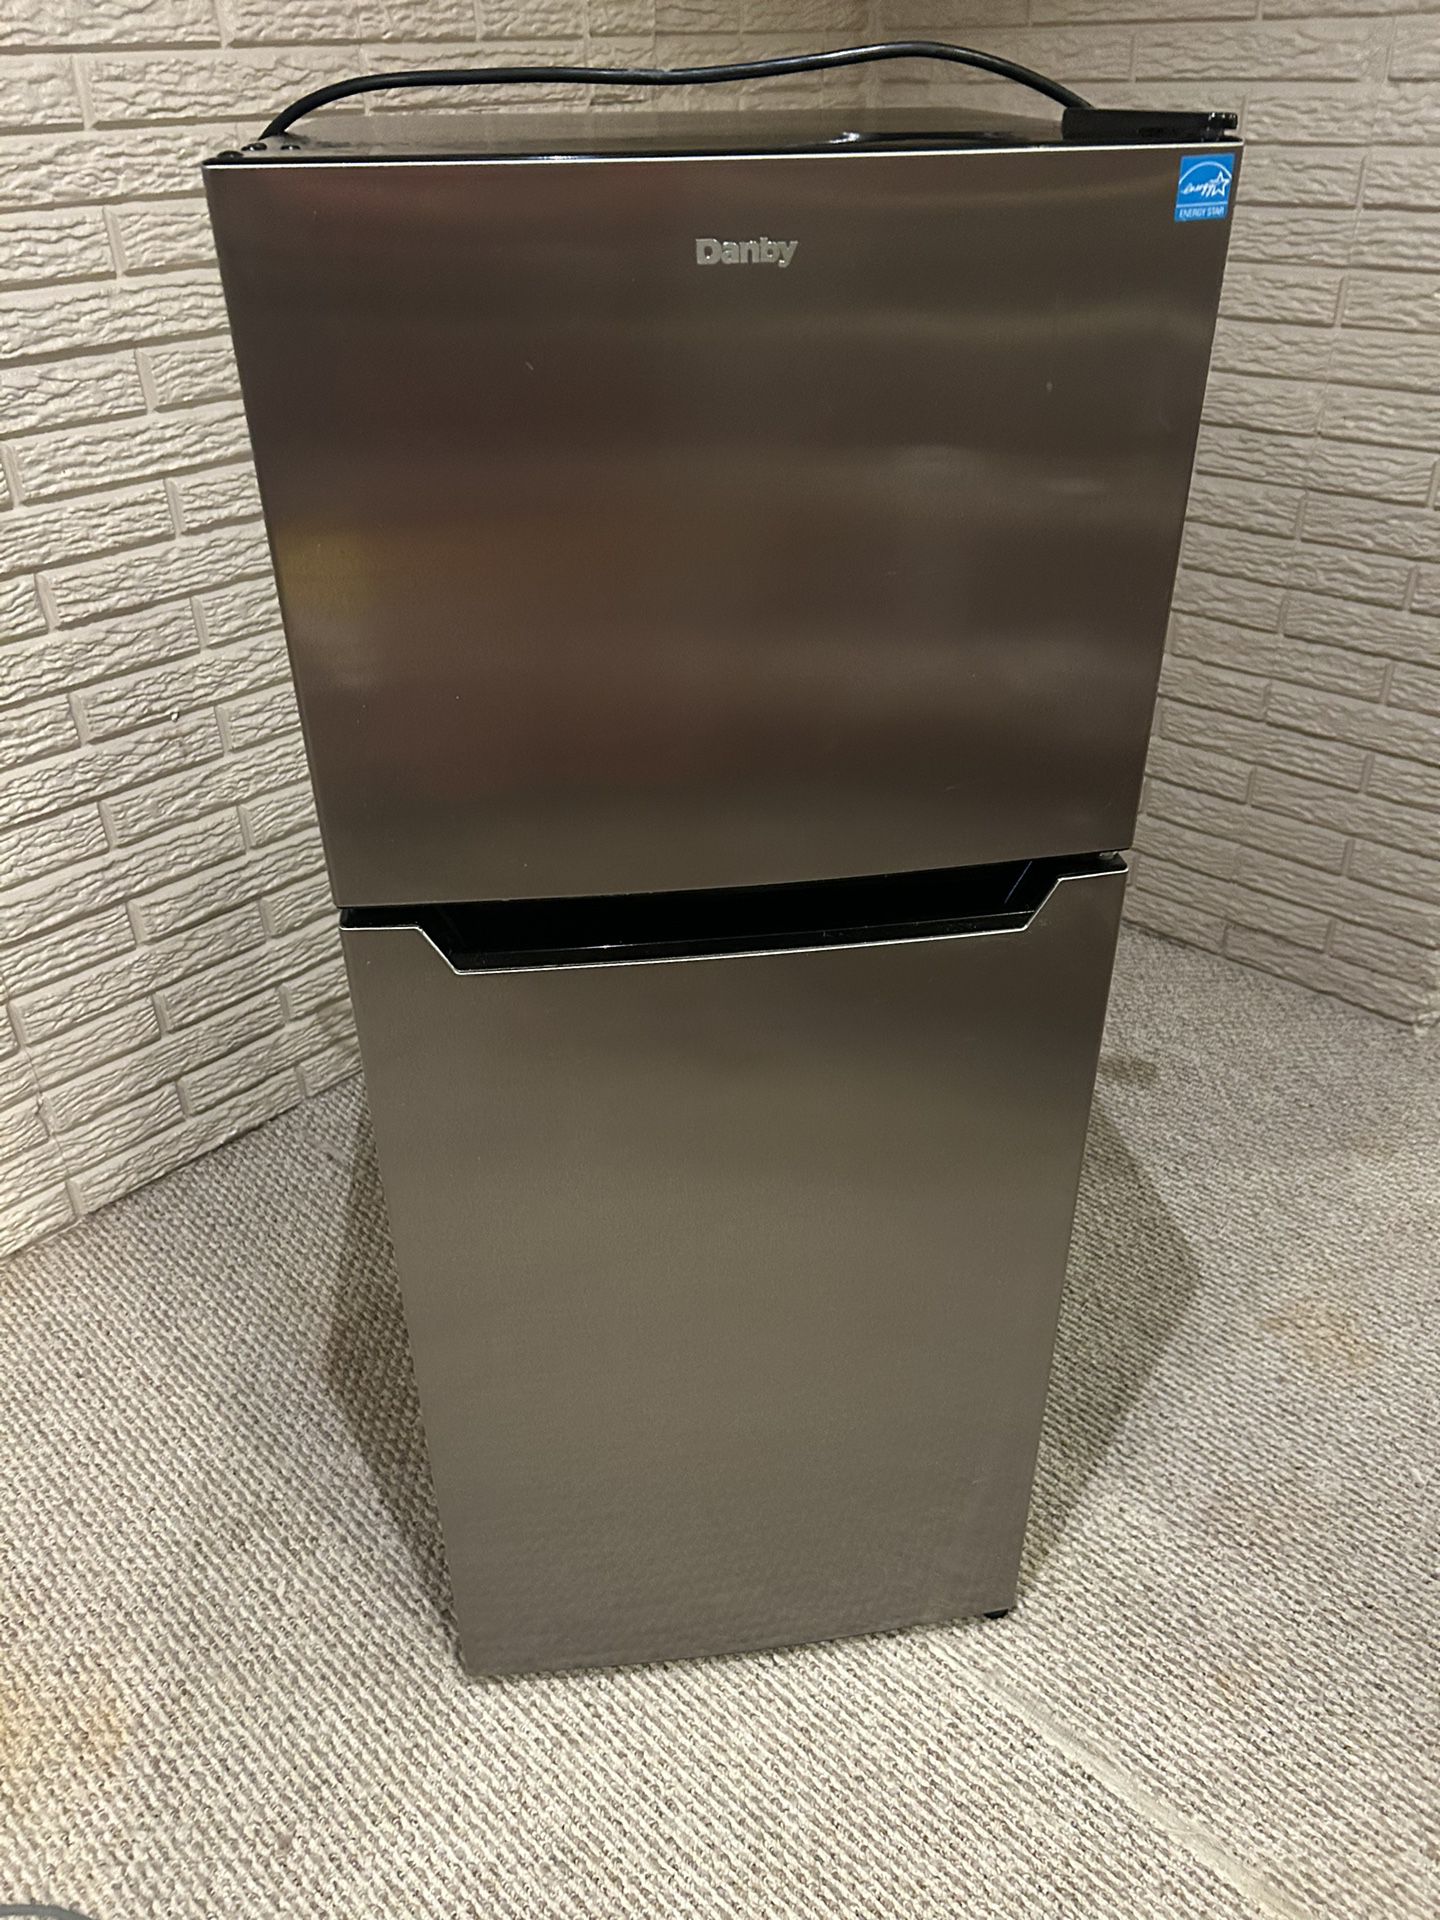  Stainless Steel Mini Refrigerator